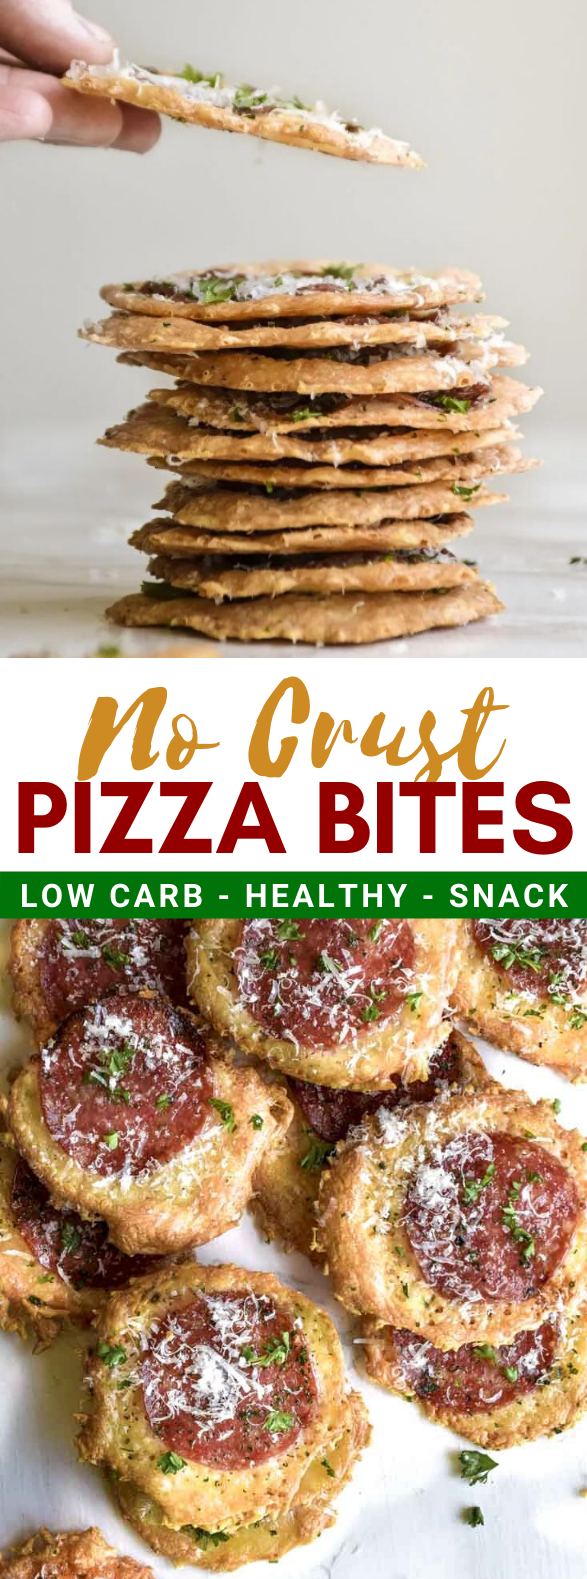 No Crust Pizza Bites (0g Carb/Bite!!) #healthy #lowcarb